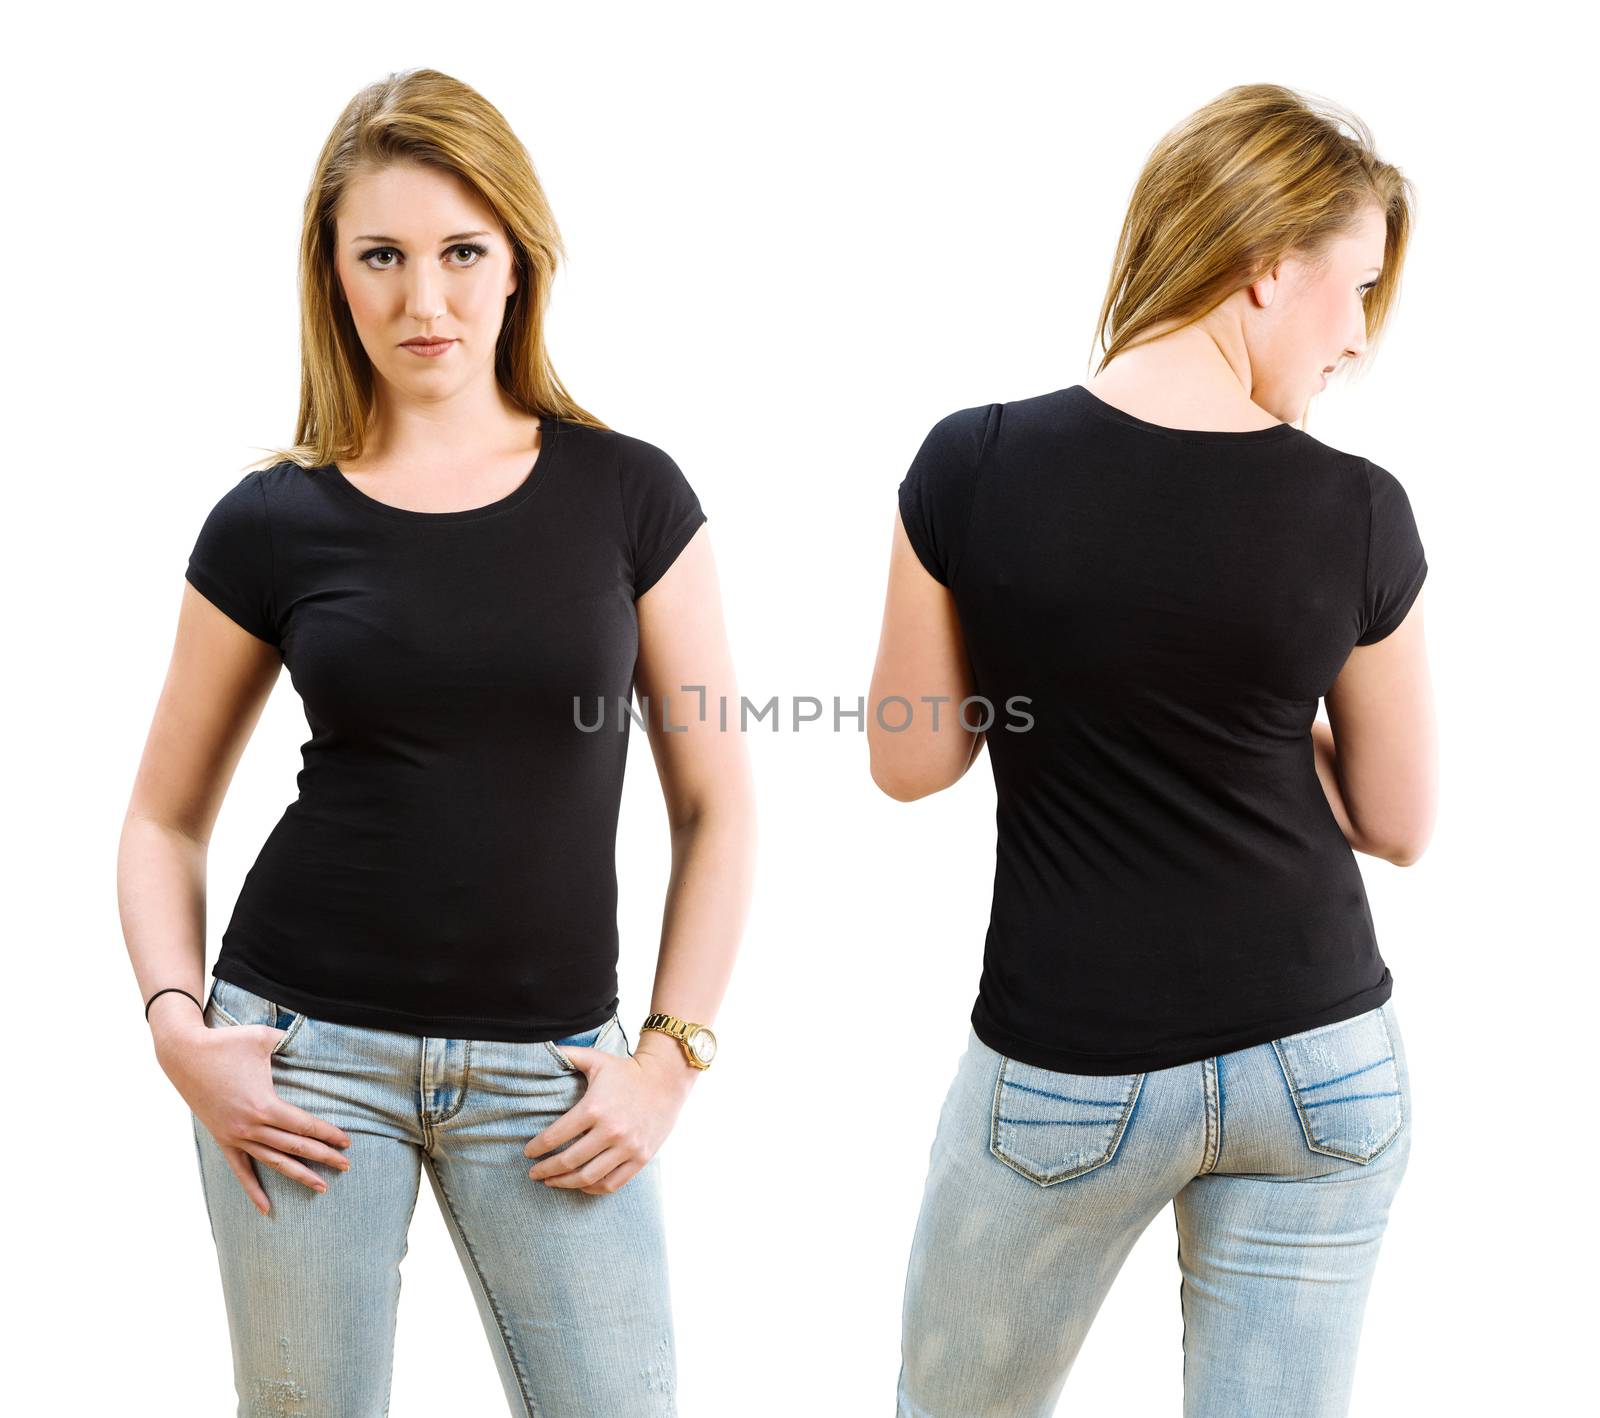 Blond woman wearing blank black shirt by sumners